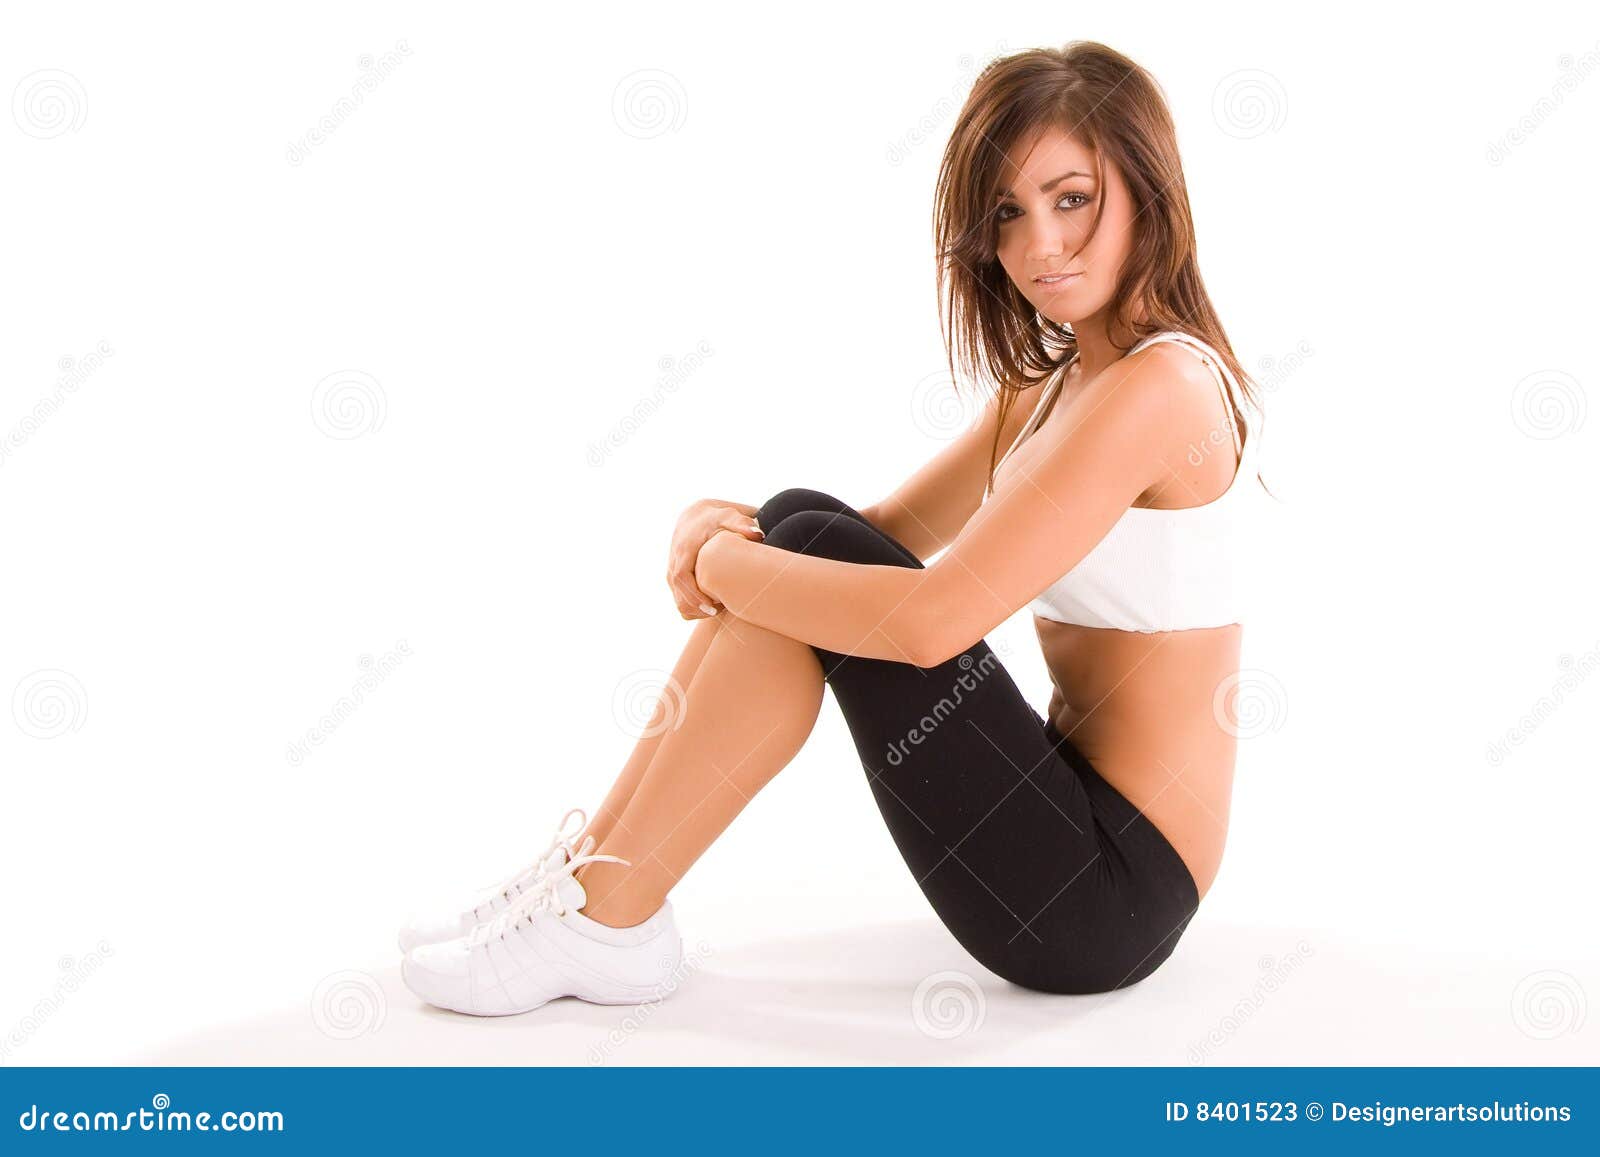 Fitness Model Stock Photos - Image: 8401523